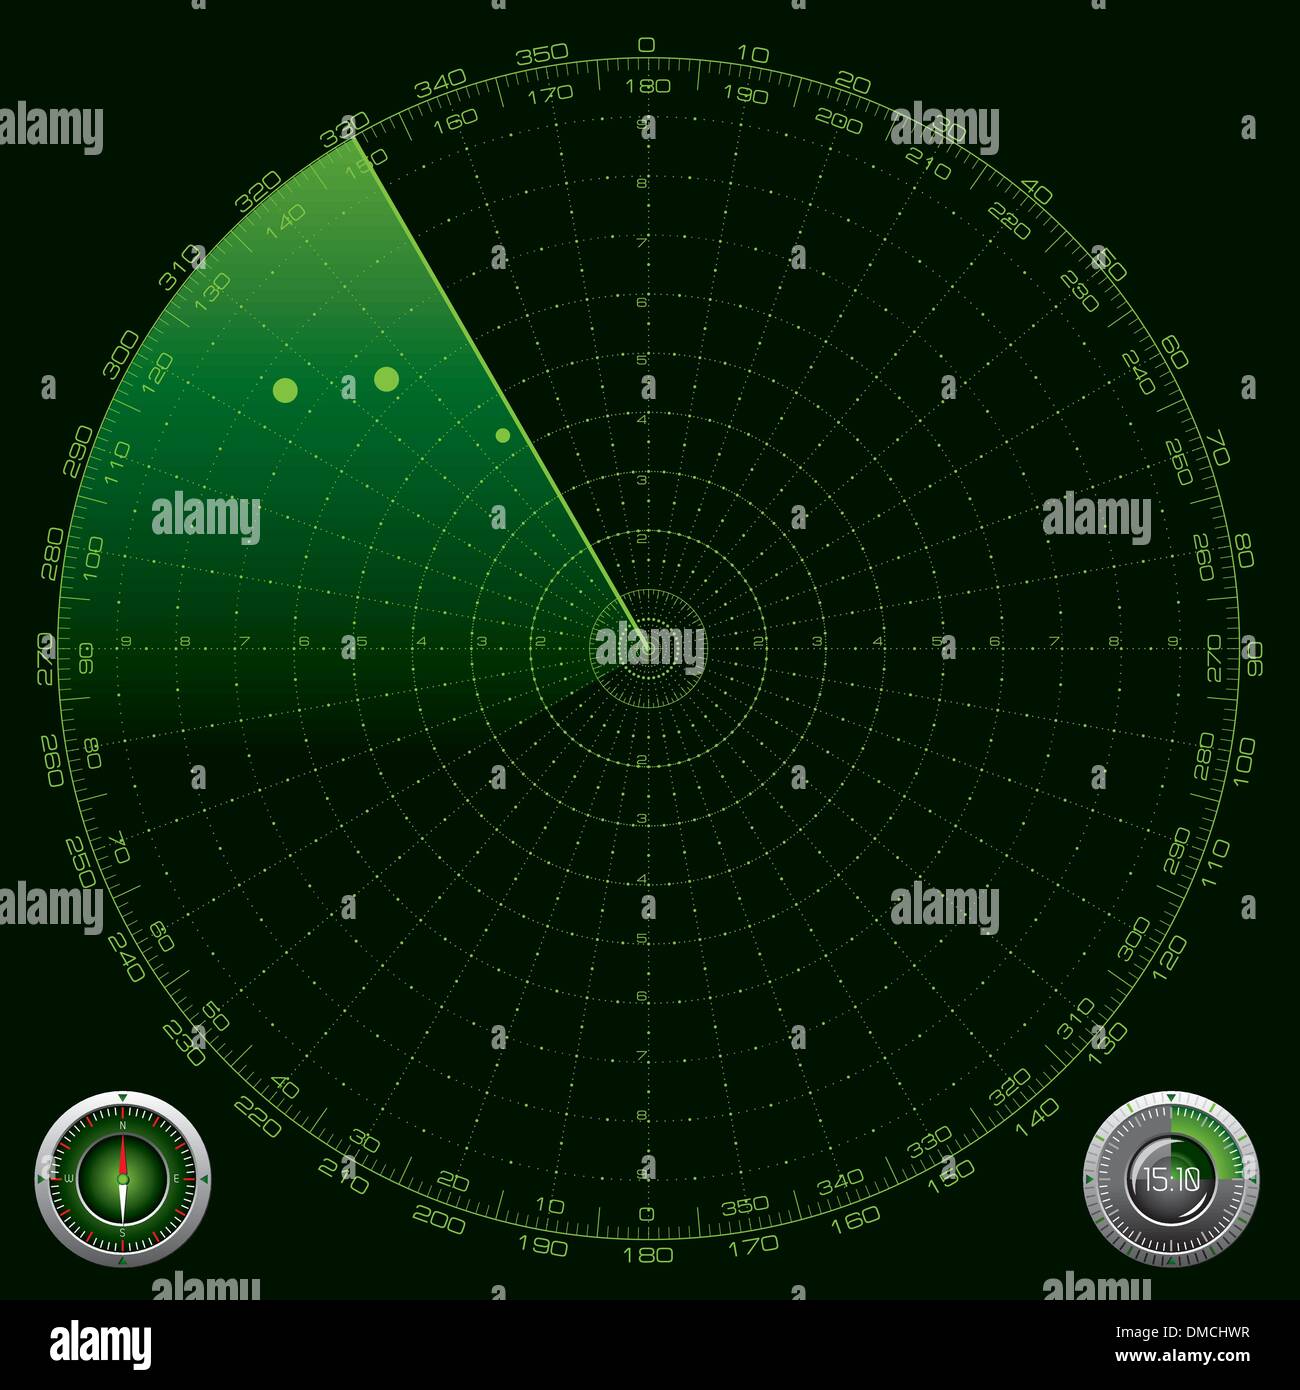 Detailed Illustration of a Radar Screen Stock Vector